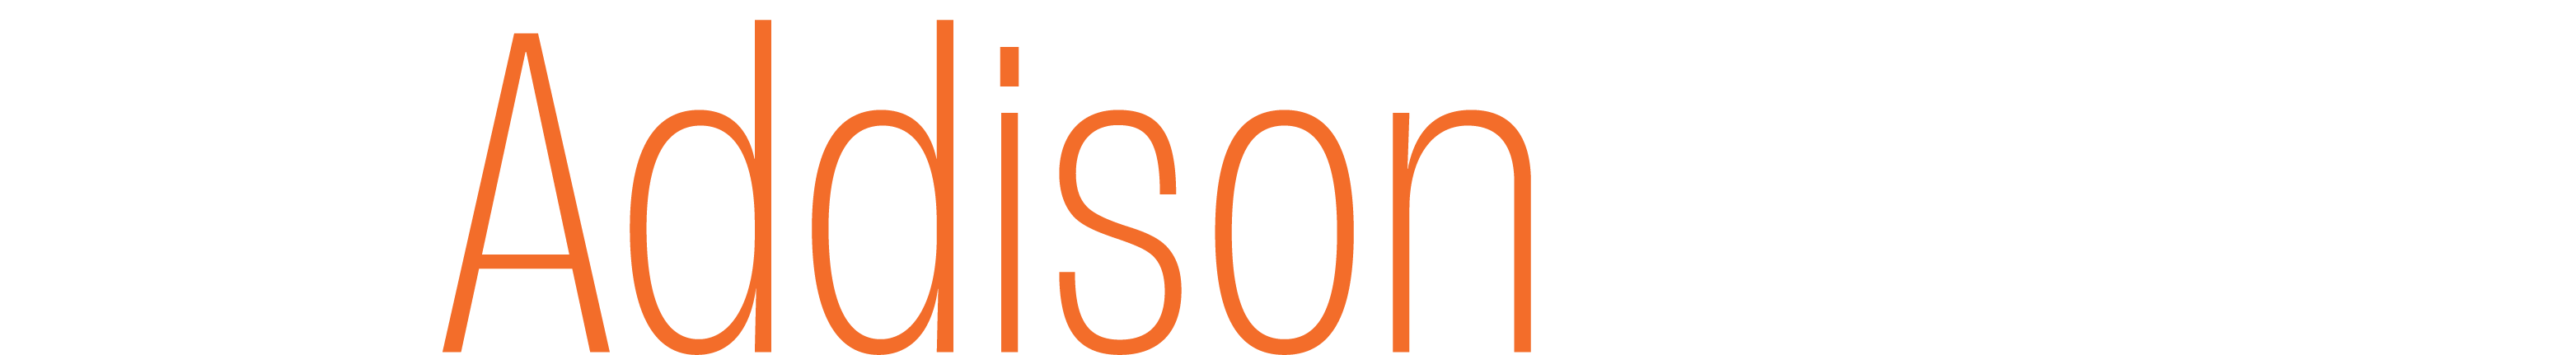 Dr. Addison Killeen logo